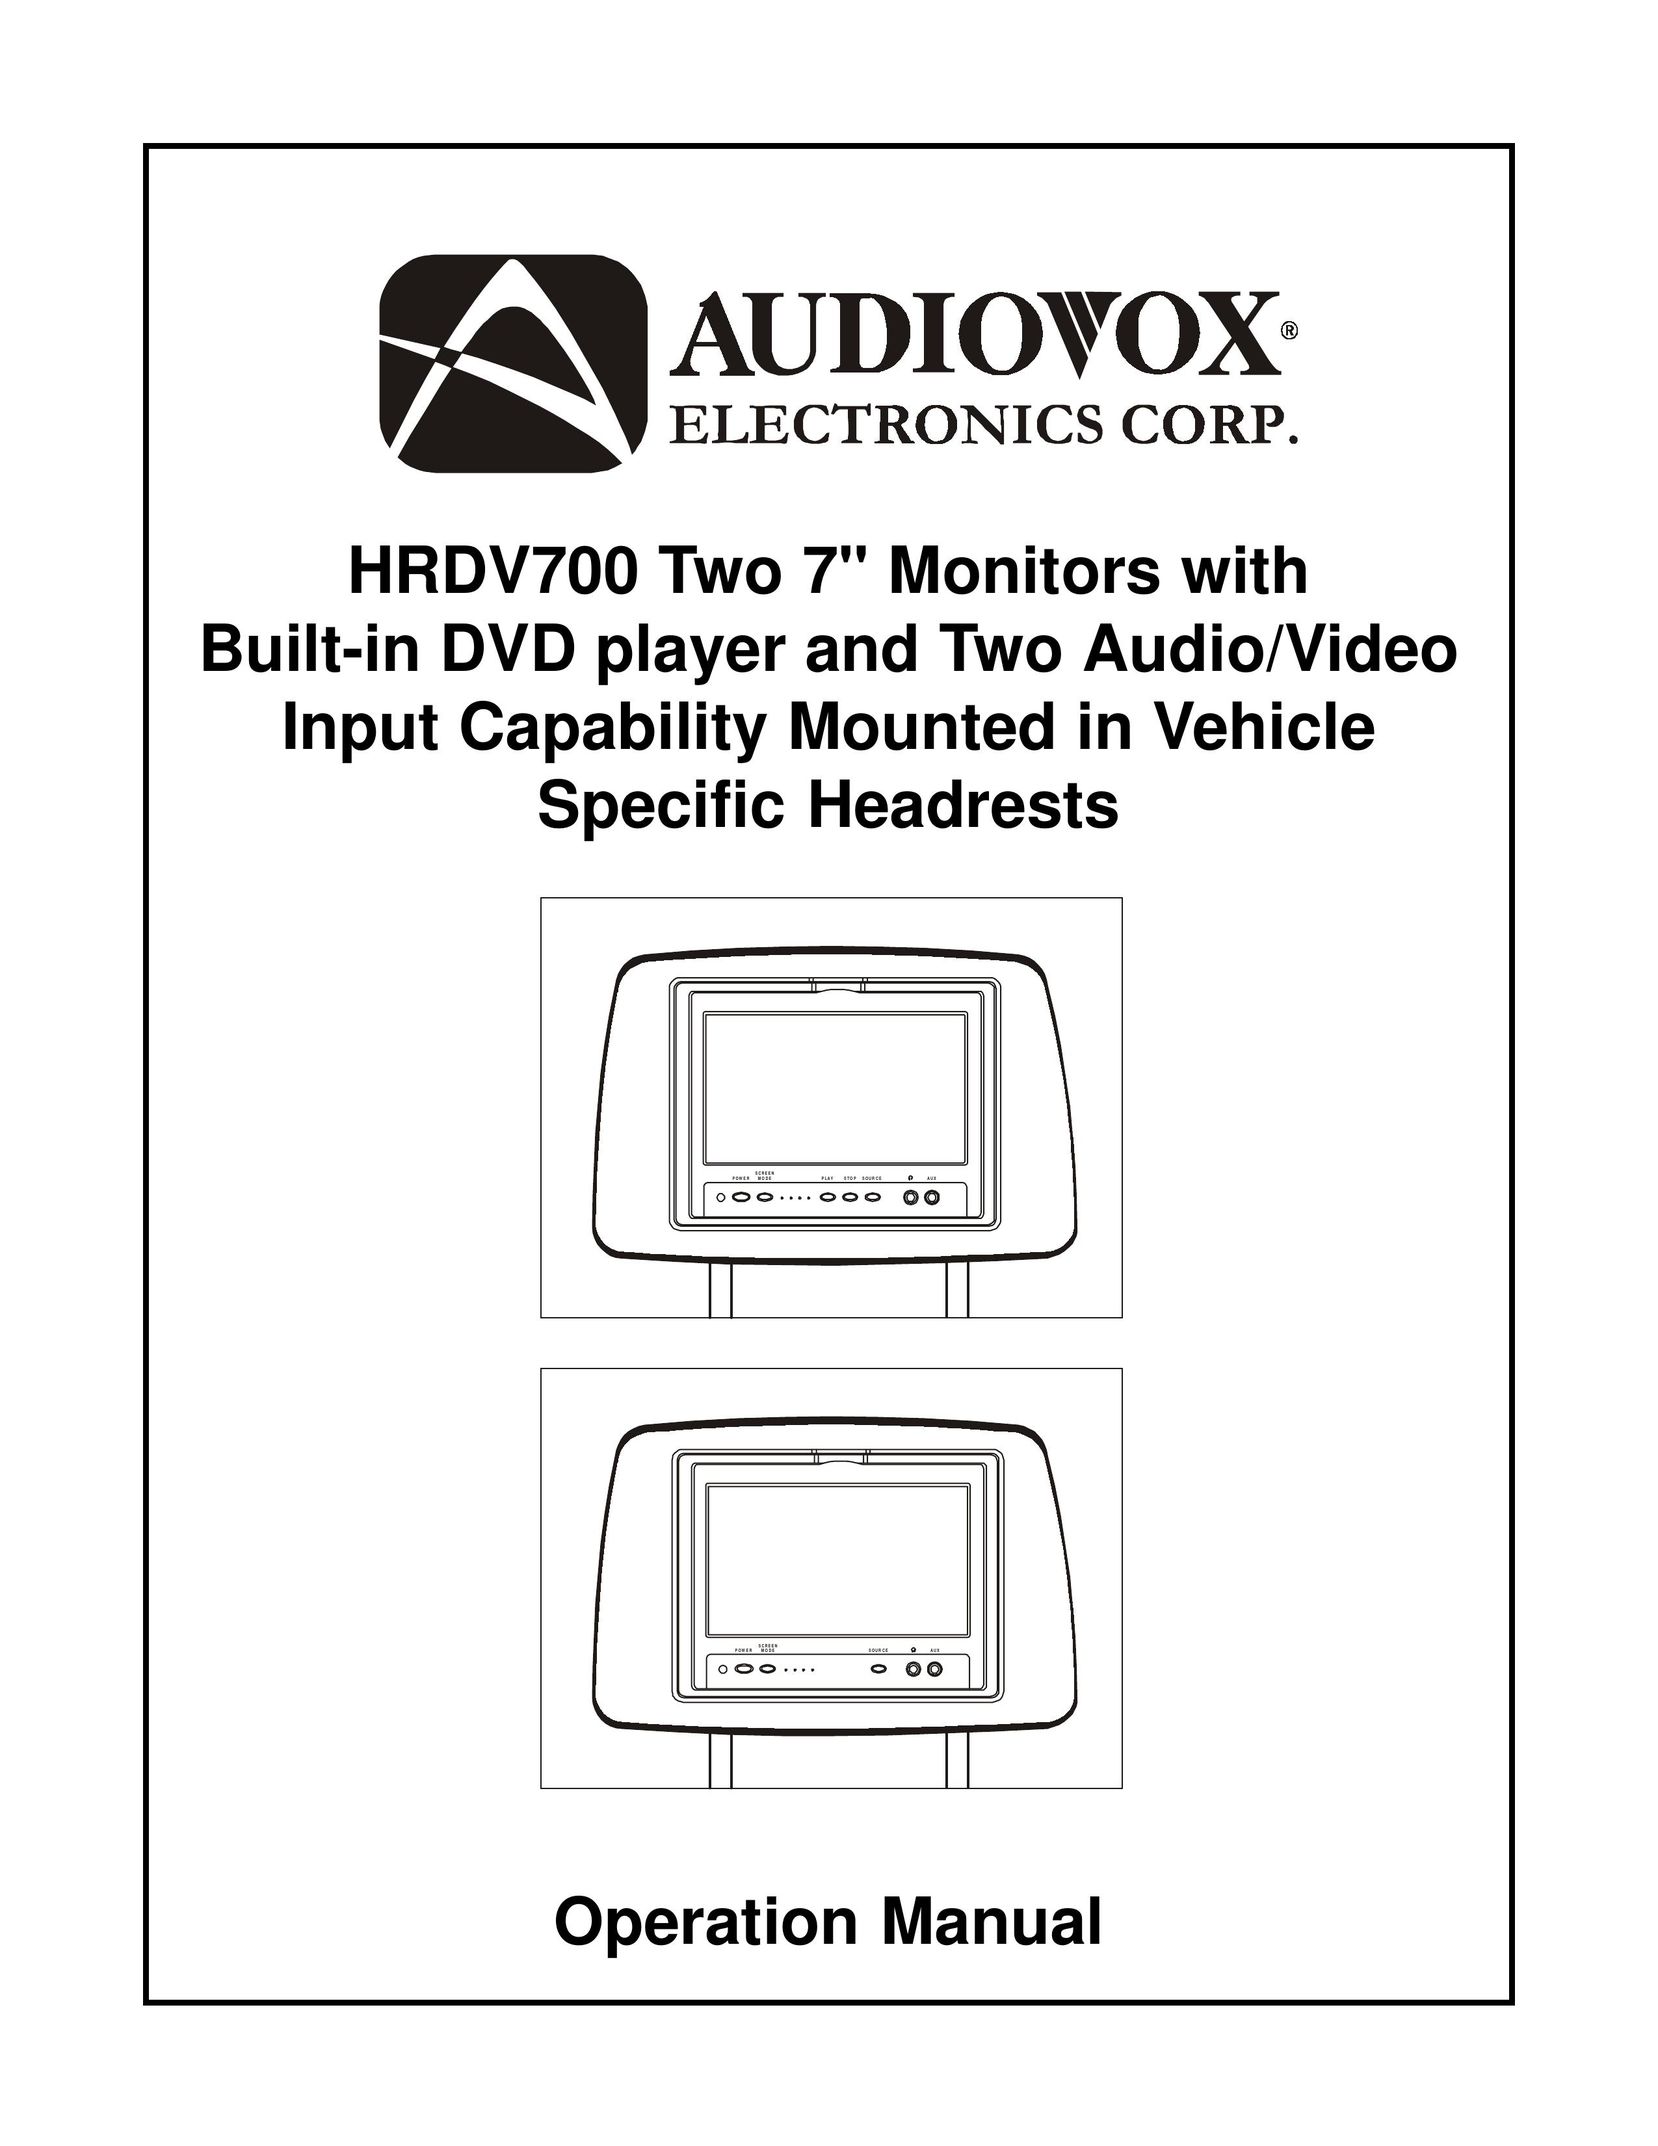 Audiovox HRDV700 Car Video System User Manual